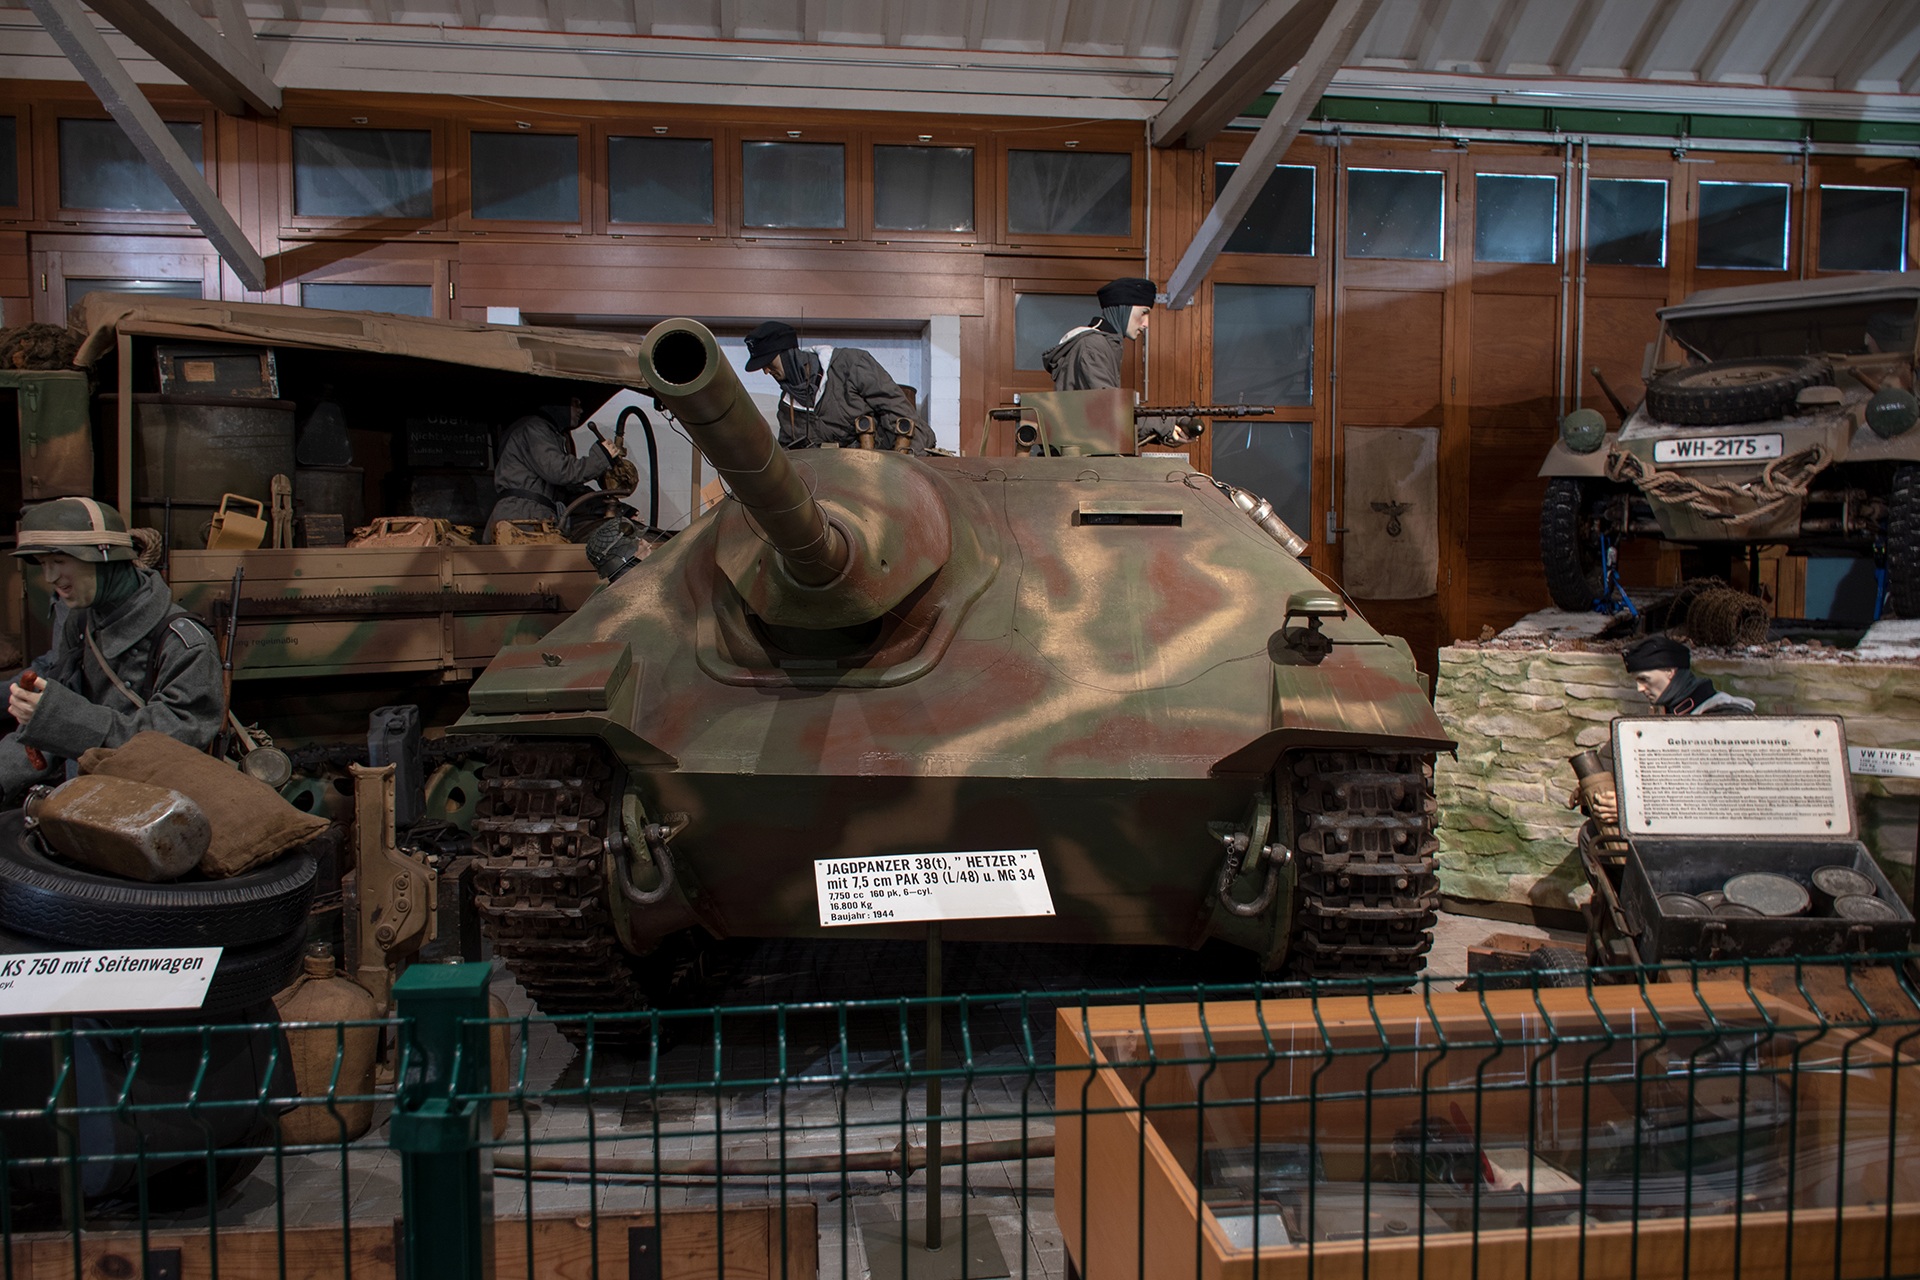 BMM Jagdpanzer 38t 1944 front - Musée National d'Histoire Militaire, Diekirch